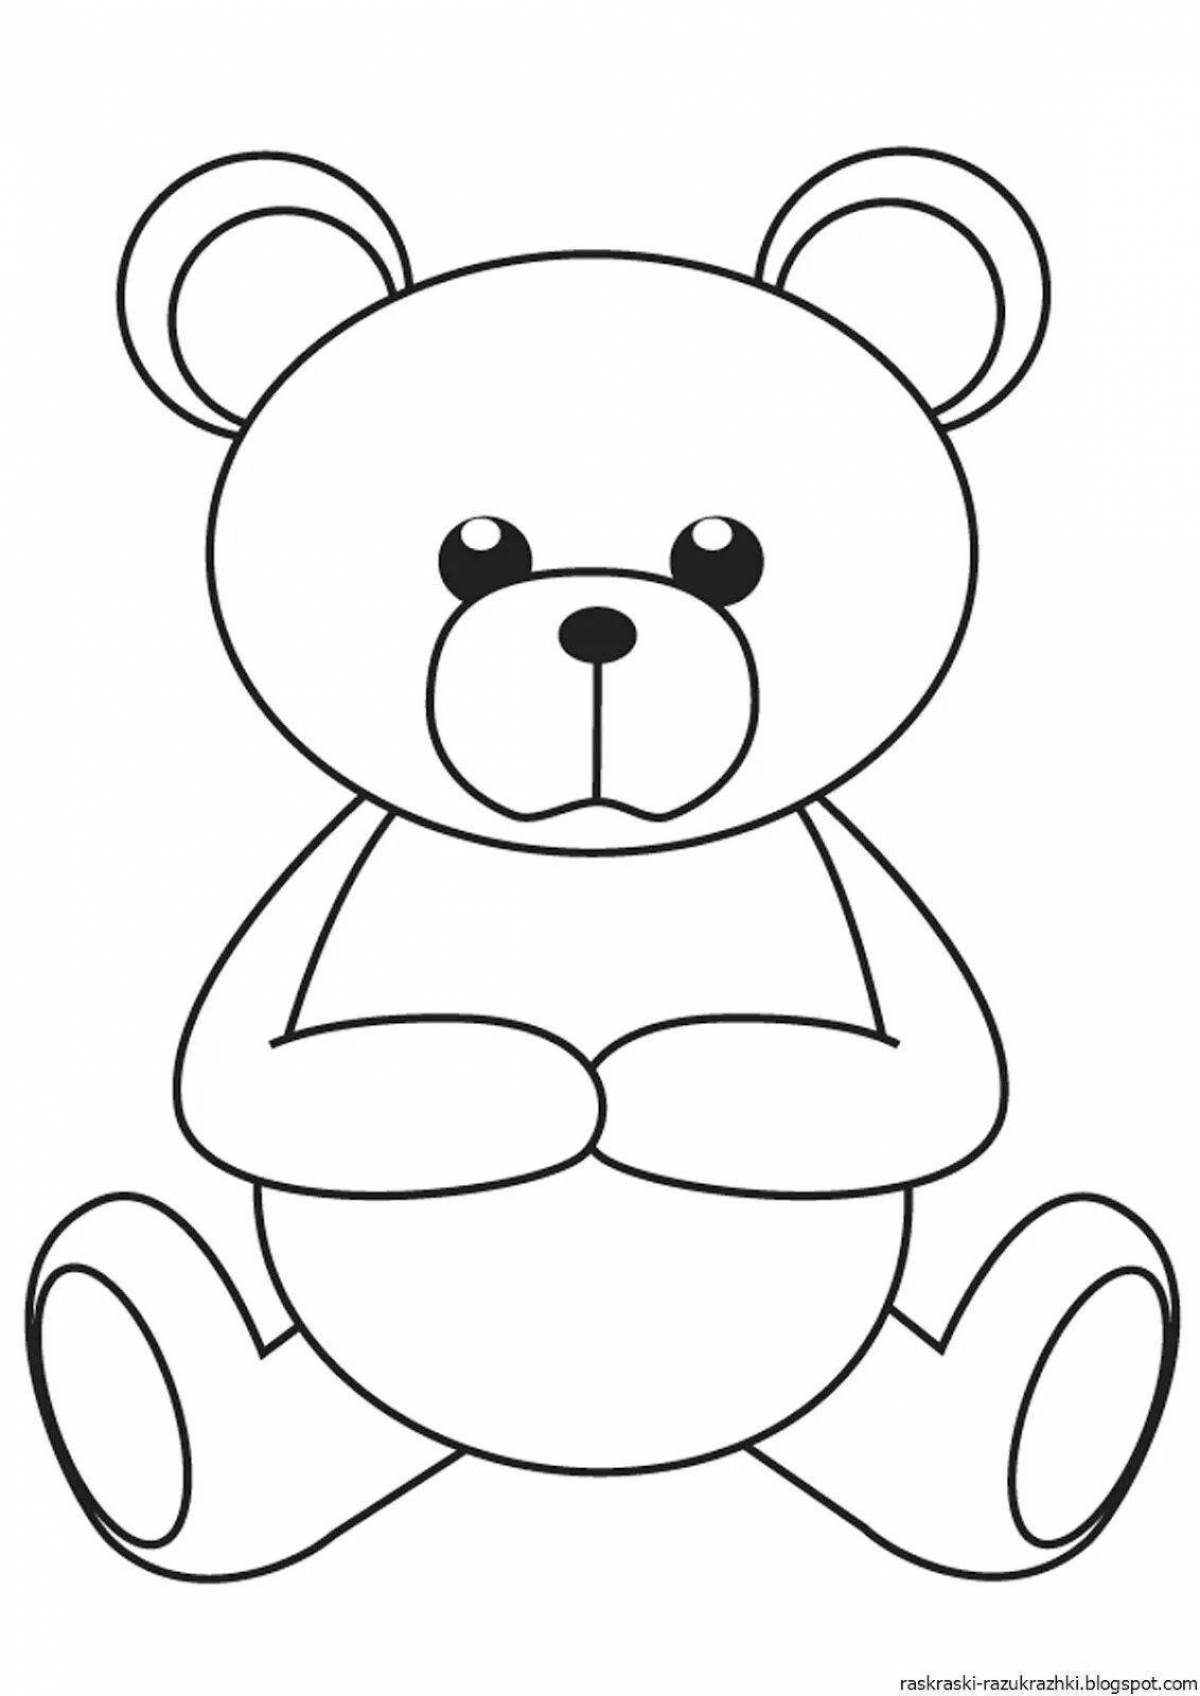 Joyful teddy bear drawing for kids